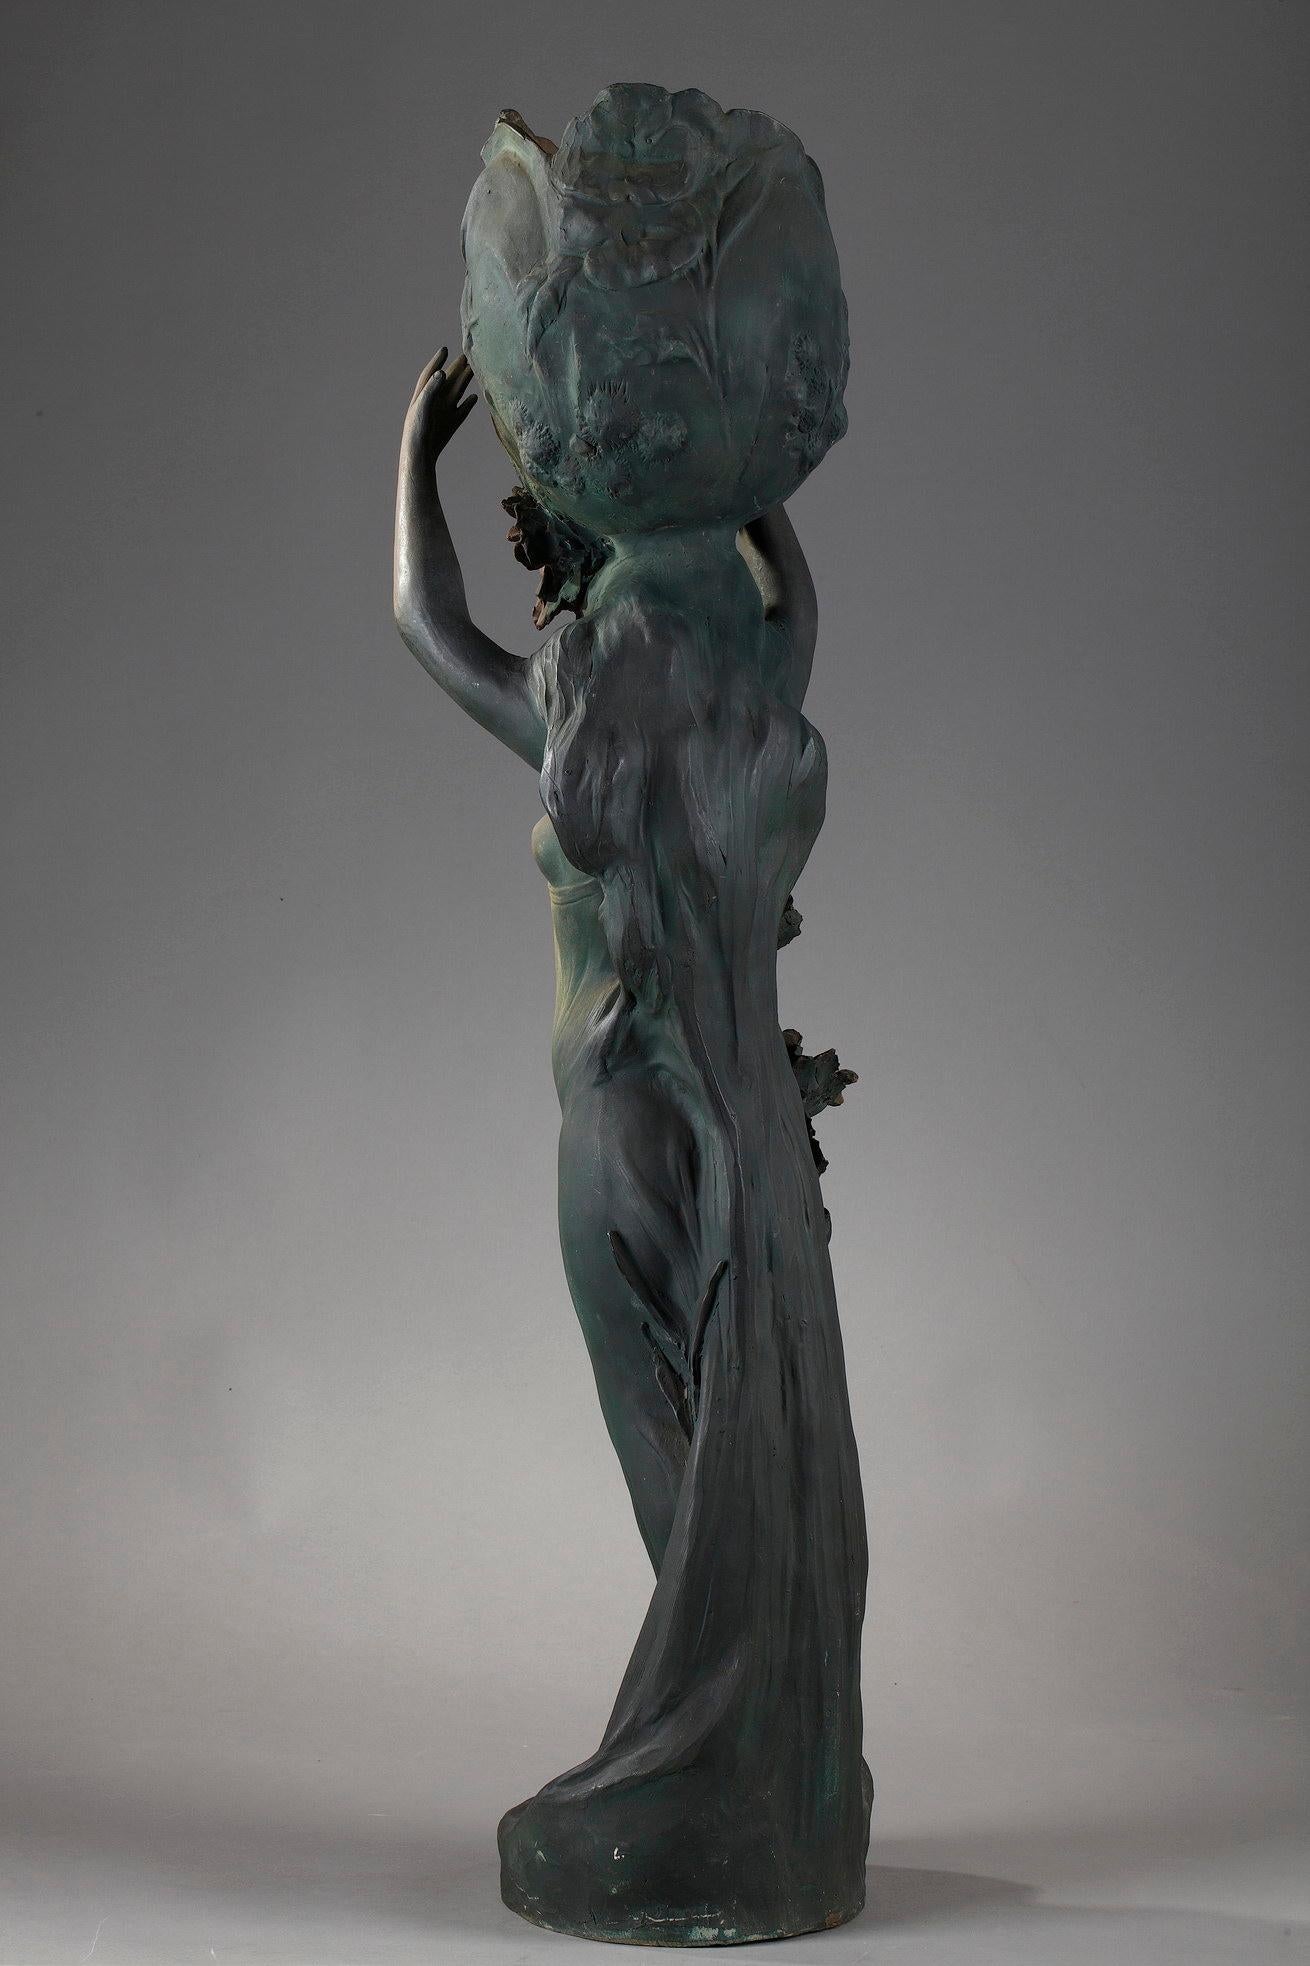 19th Century Polychrome Terracotta Sculpture by Capaldo